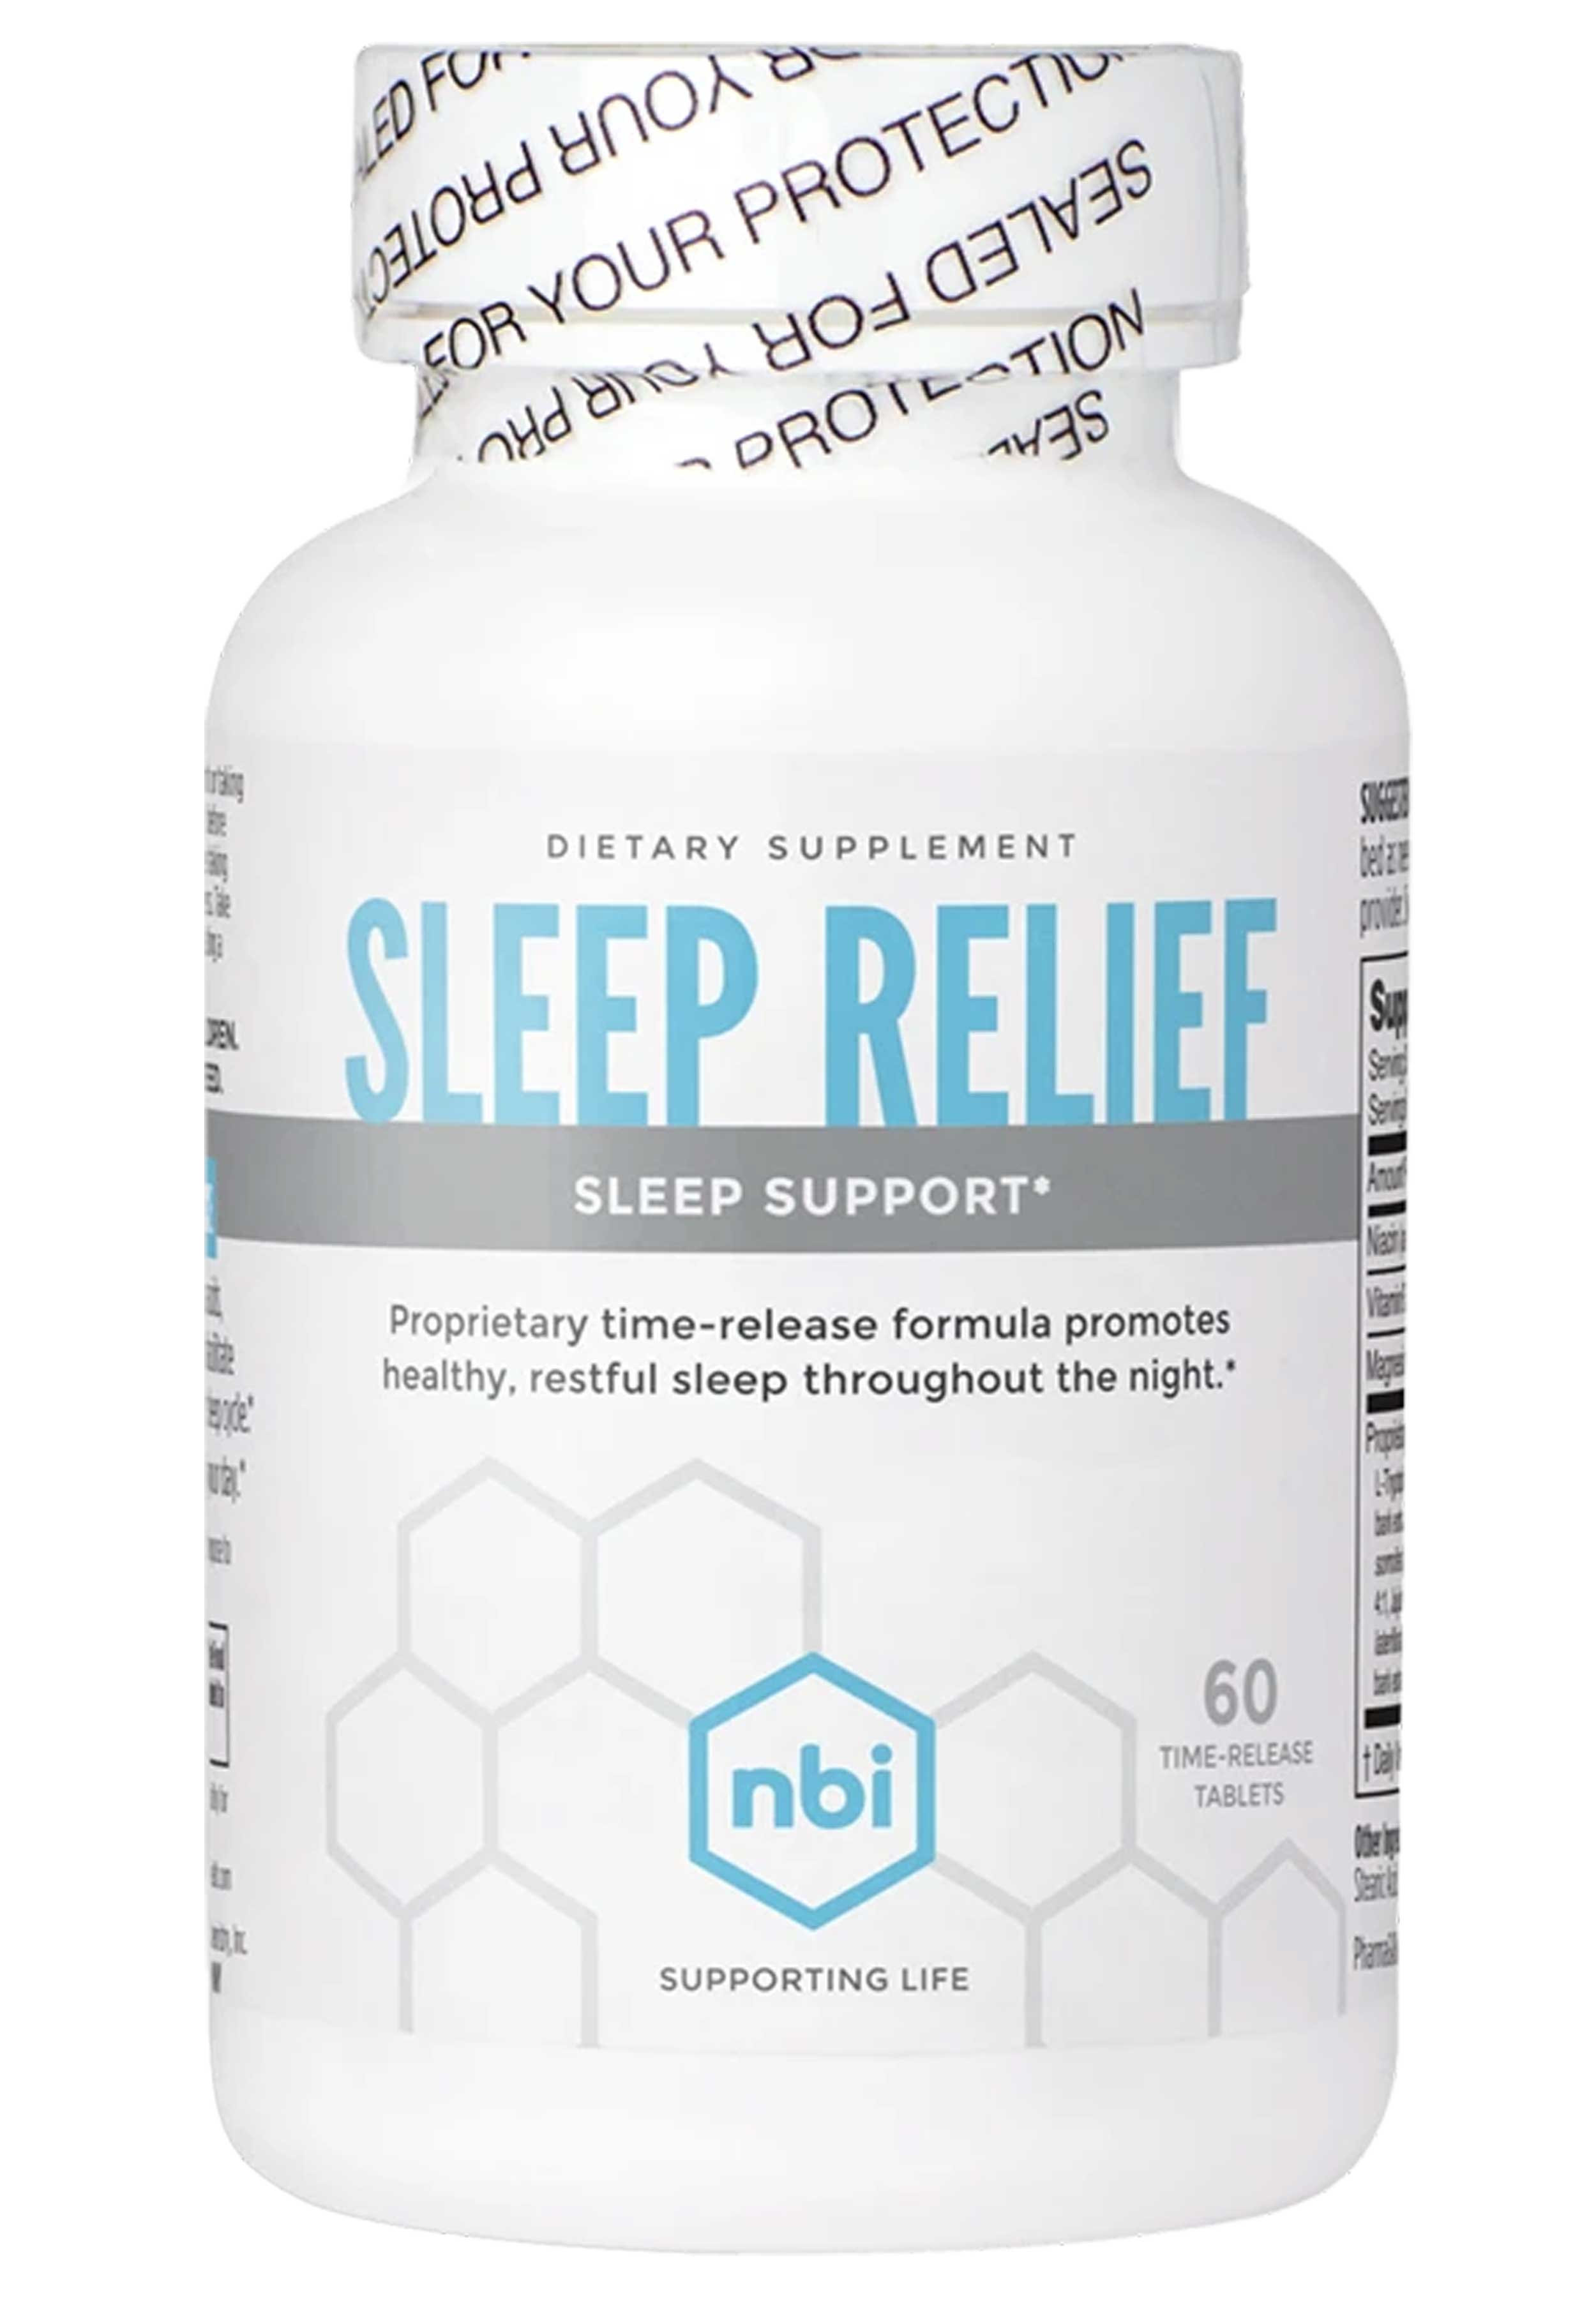 NBI Sleep Relief